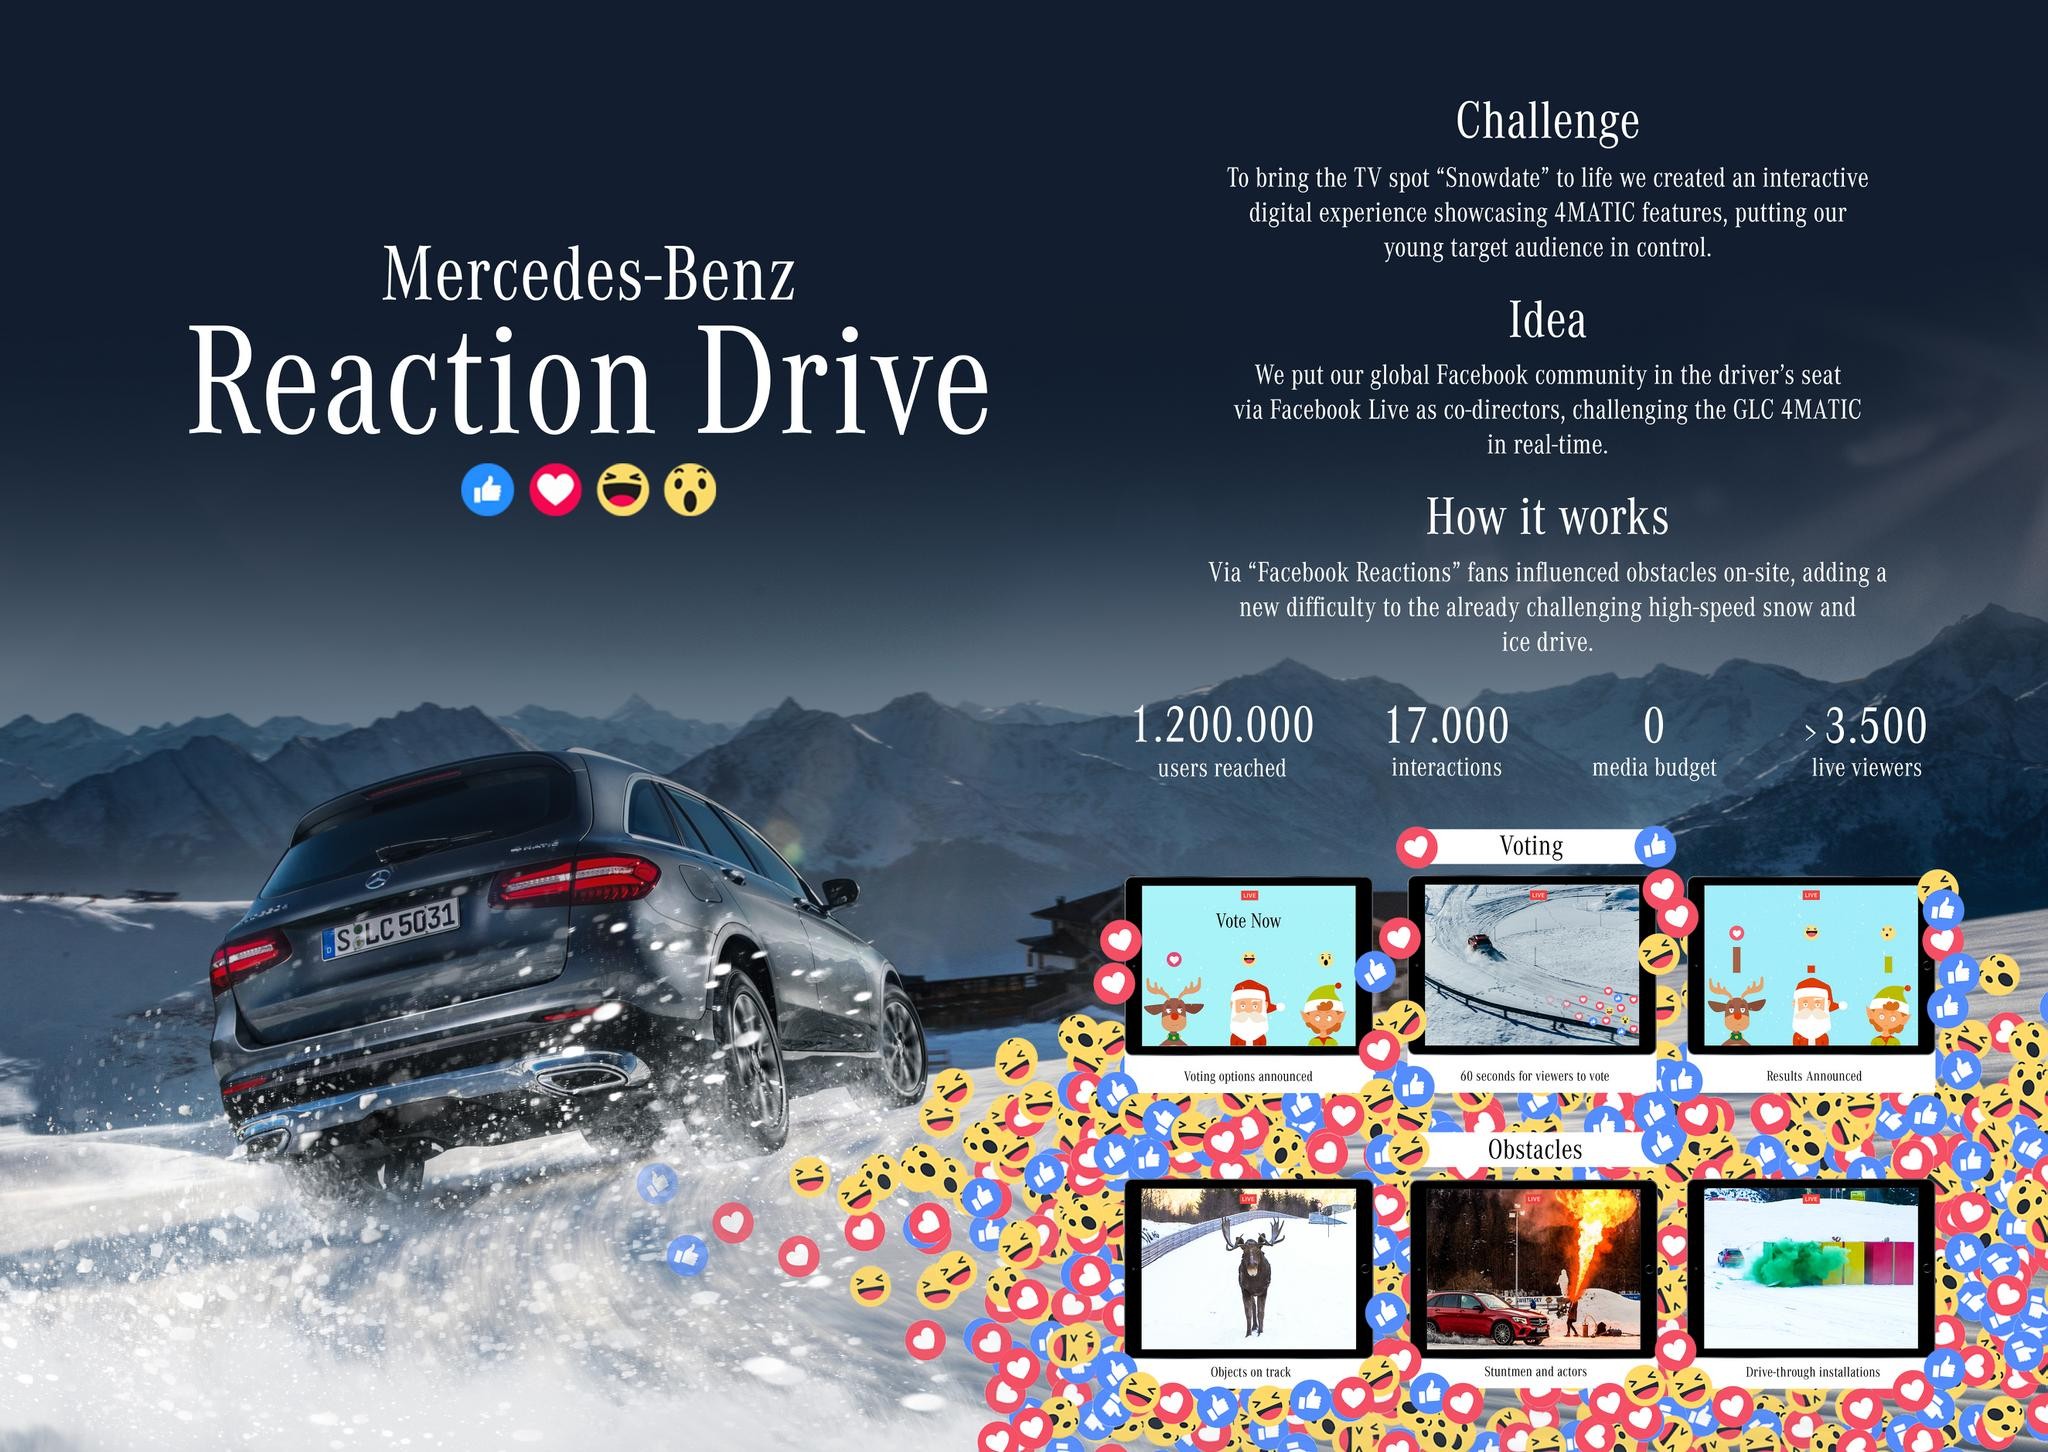 The Mercedes-Benz Reaction Drive